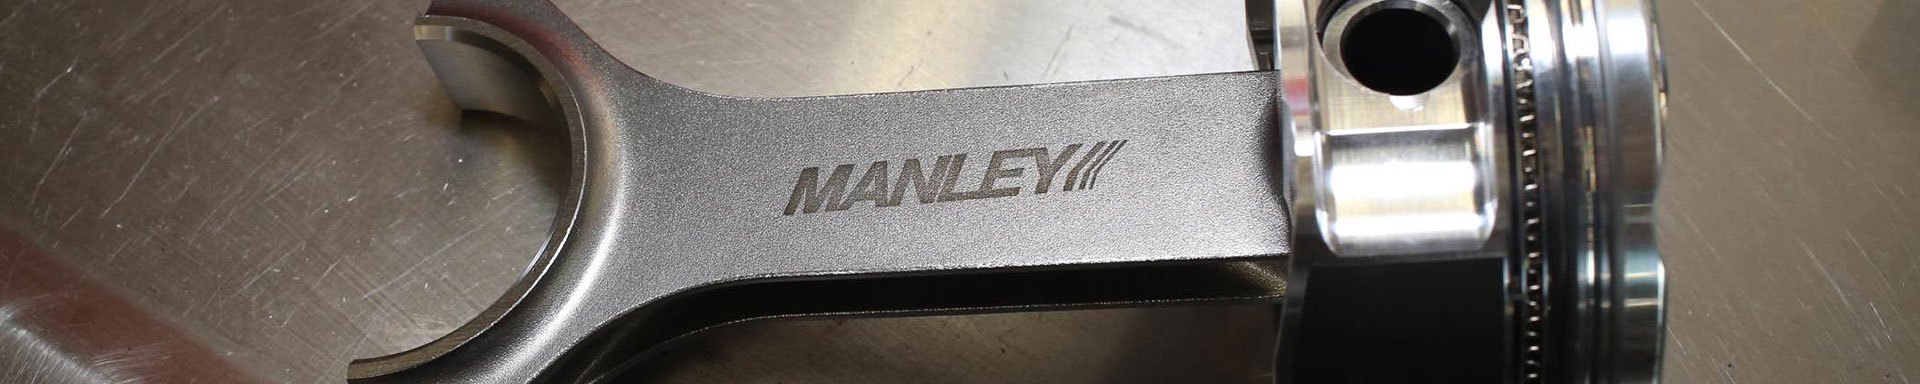 Manley Engine